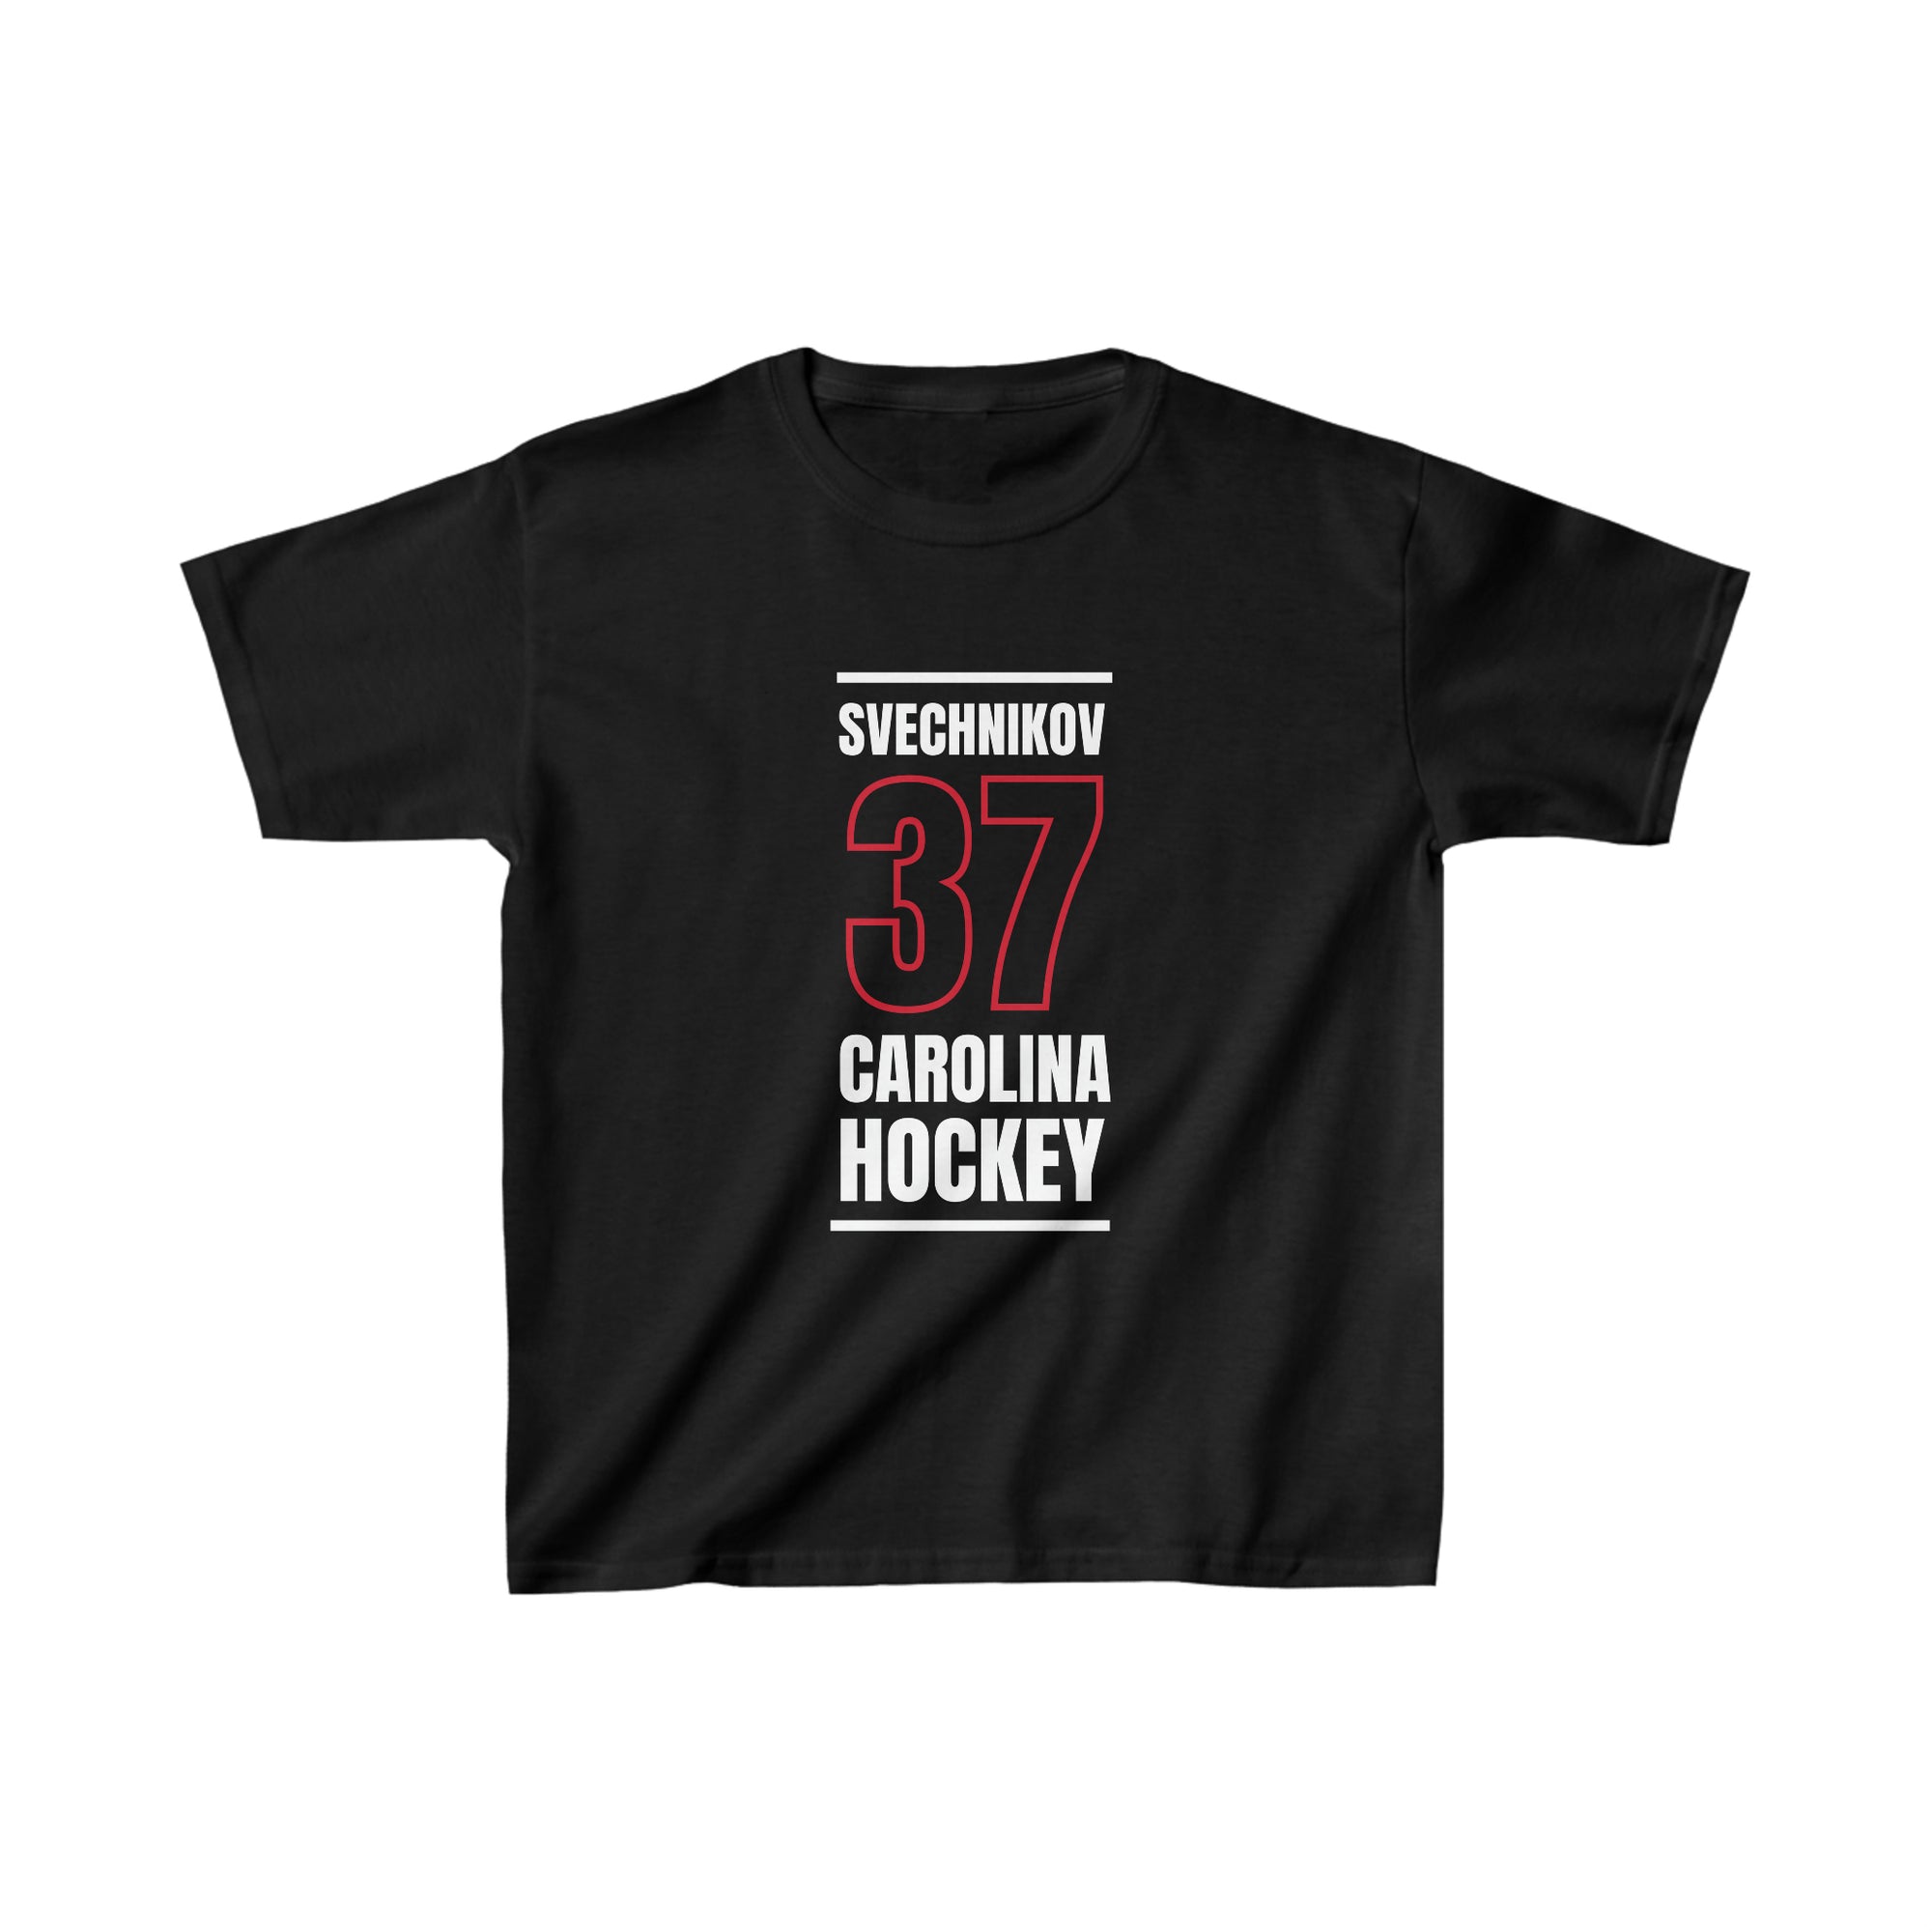 Svechnikov 37 Carolina Hockey Black Vertical Design Kids Tee